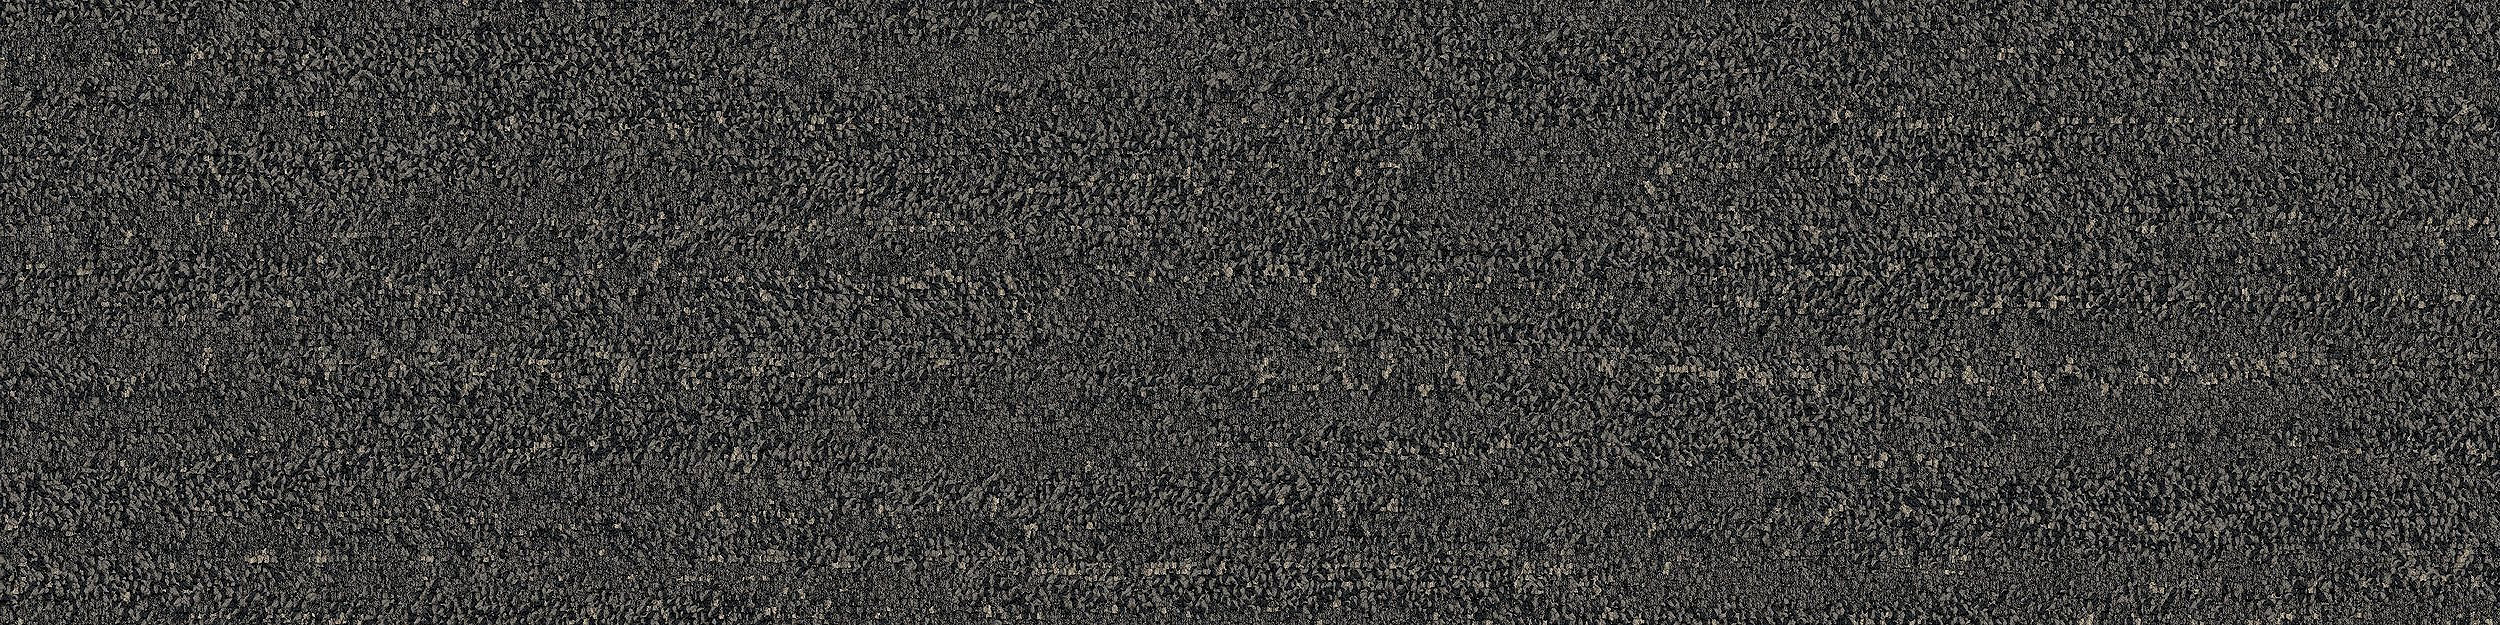 Rockland Road Carpet Tile In Charcoal Quarry image number 4